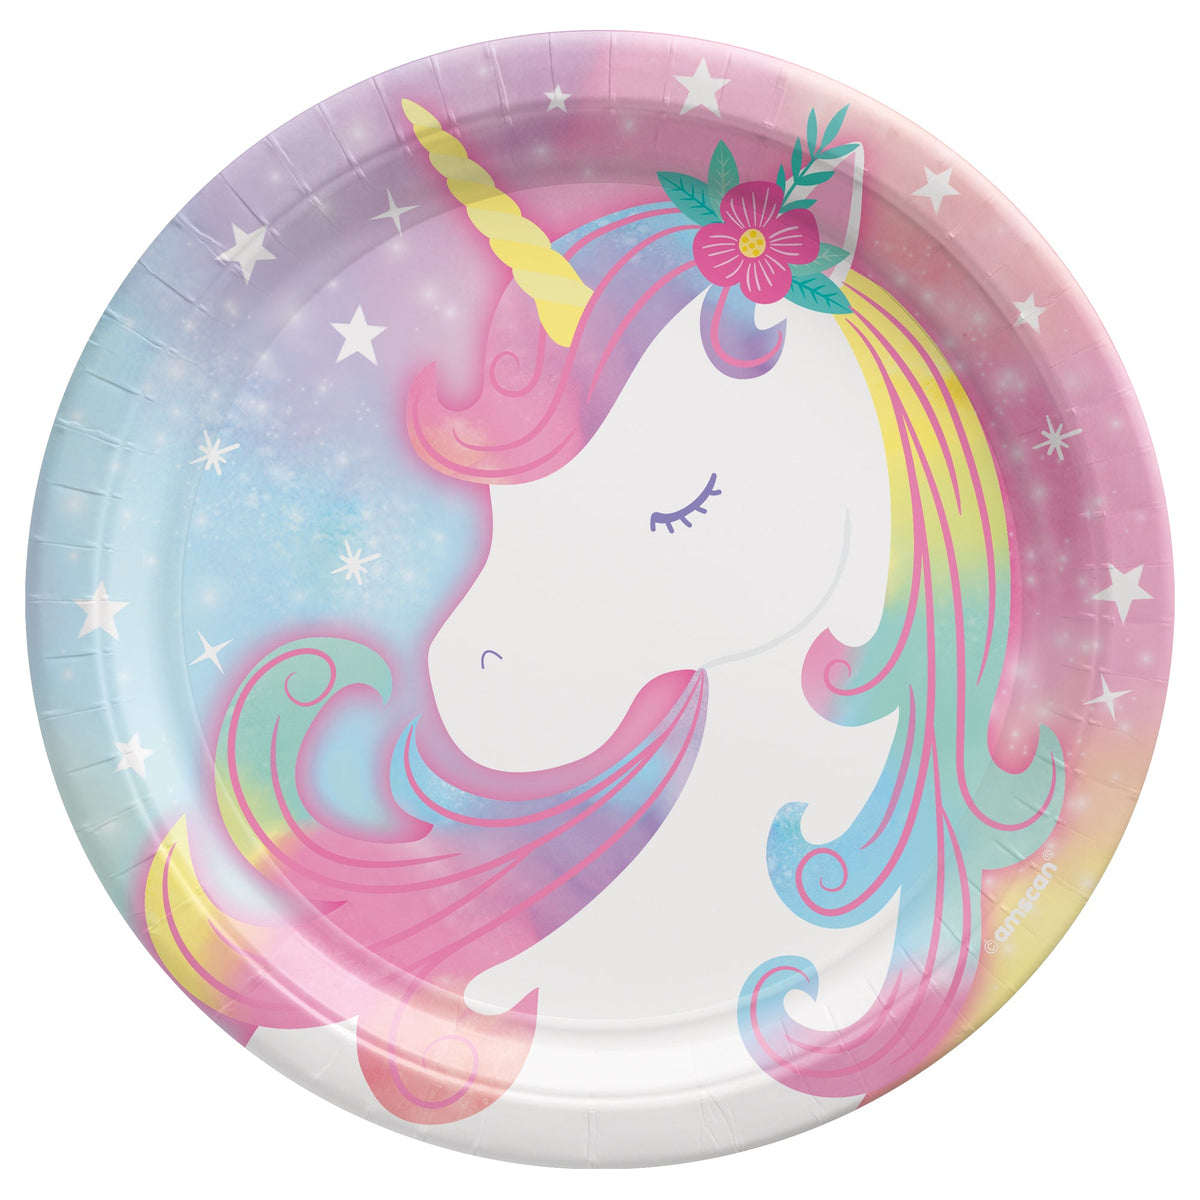 Enchanted Unicorn 7" Round Plates Package of 8